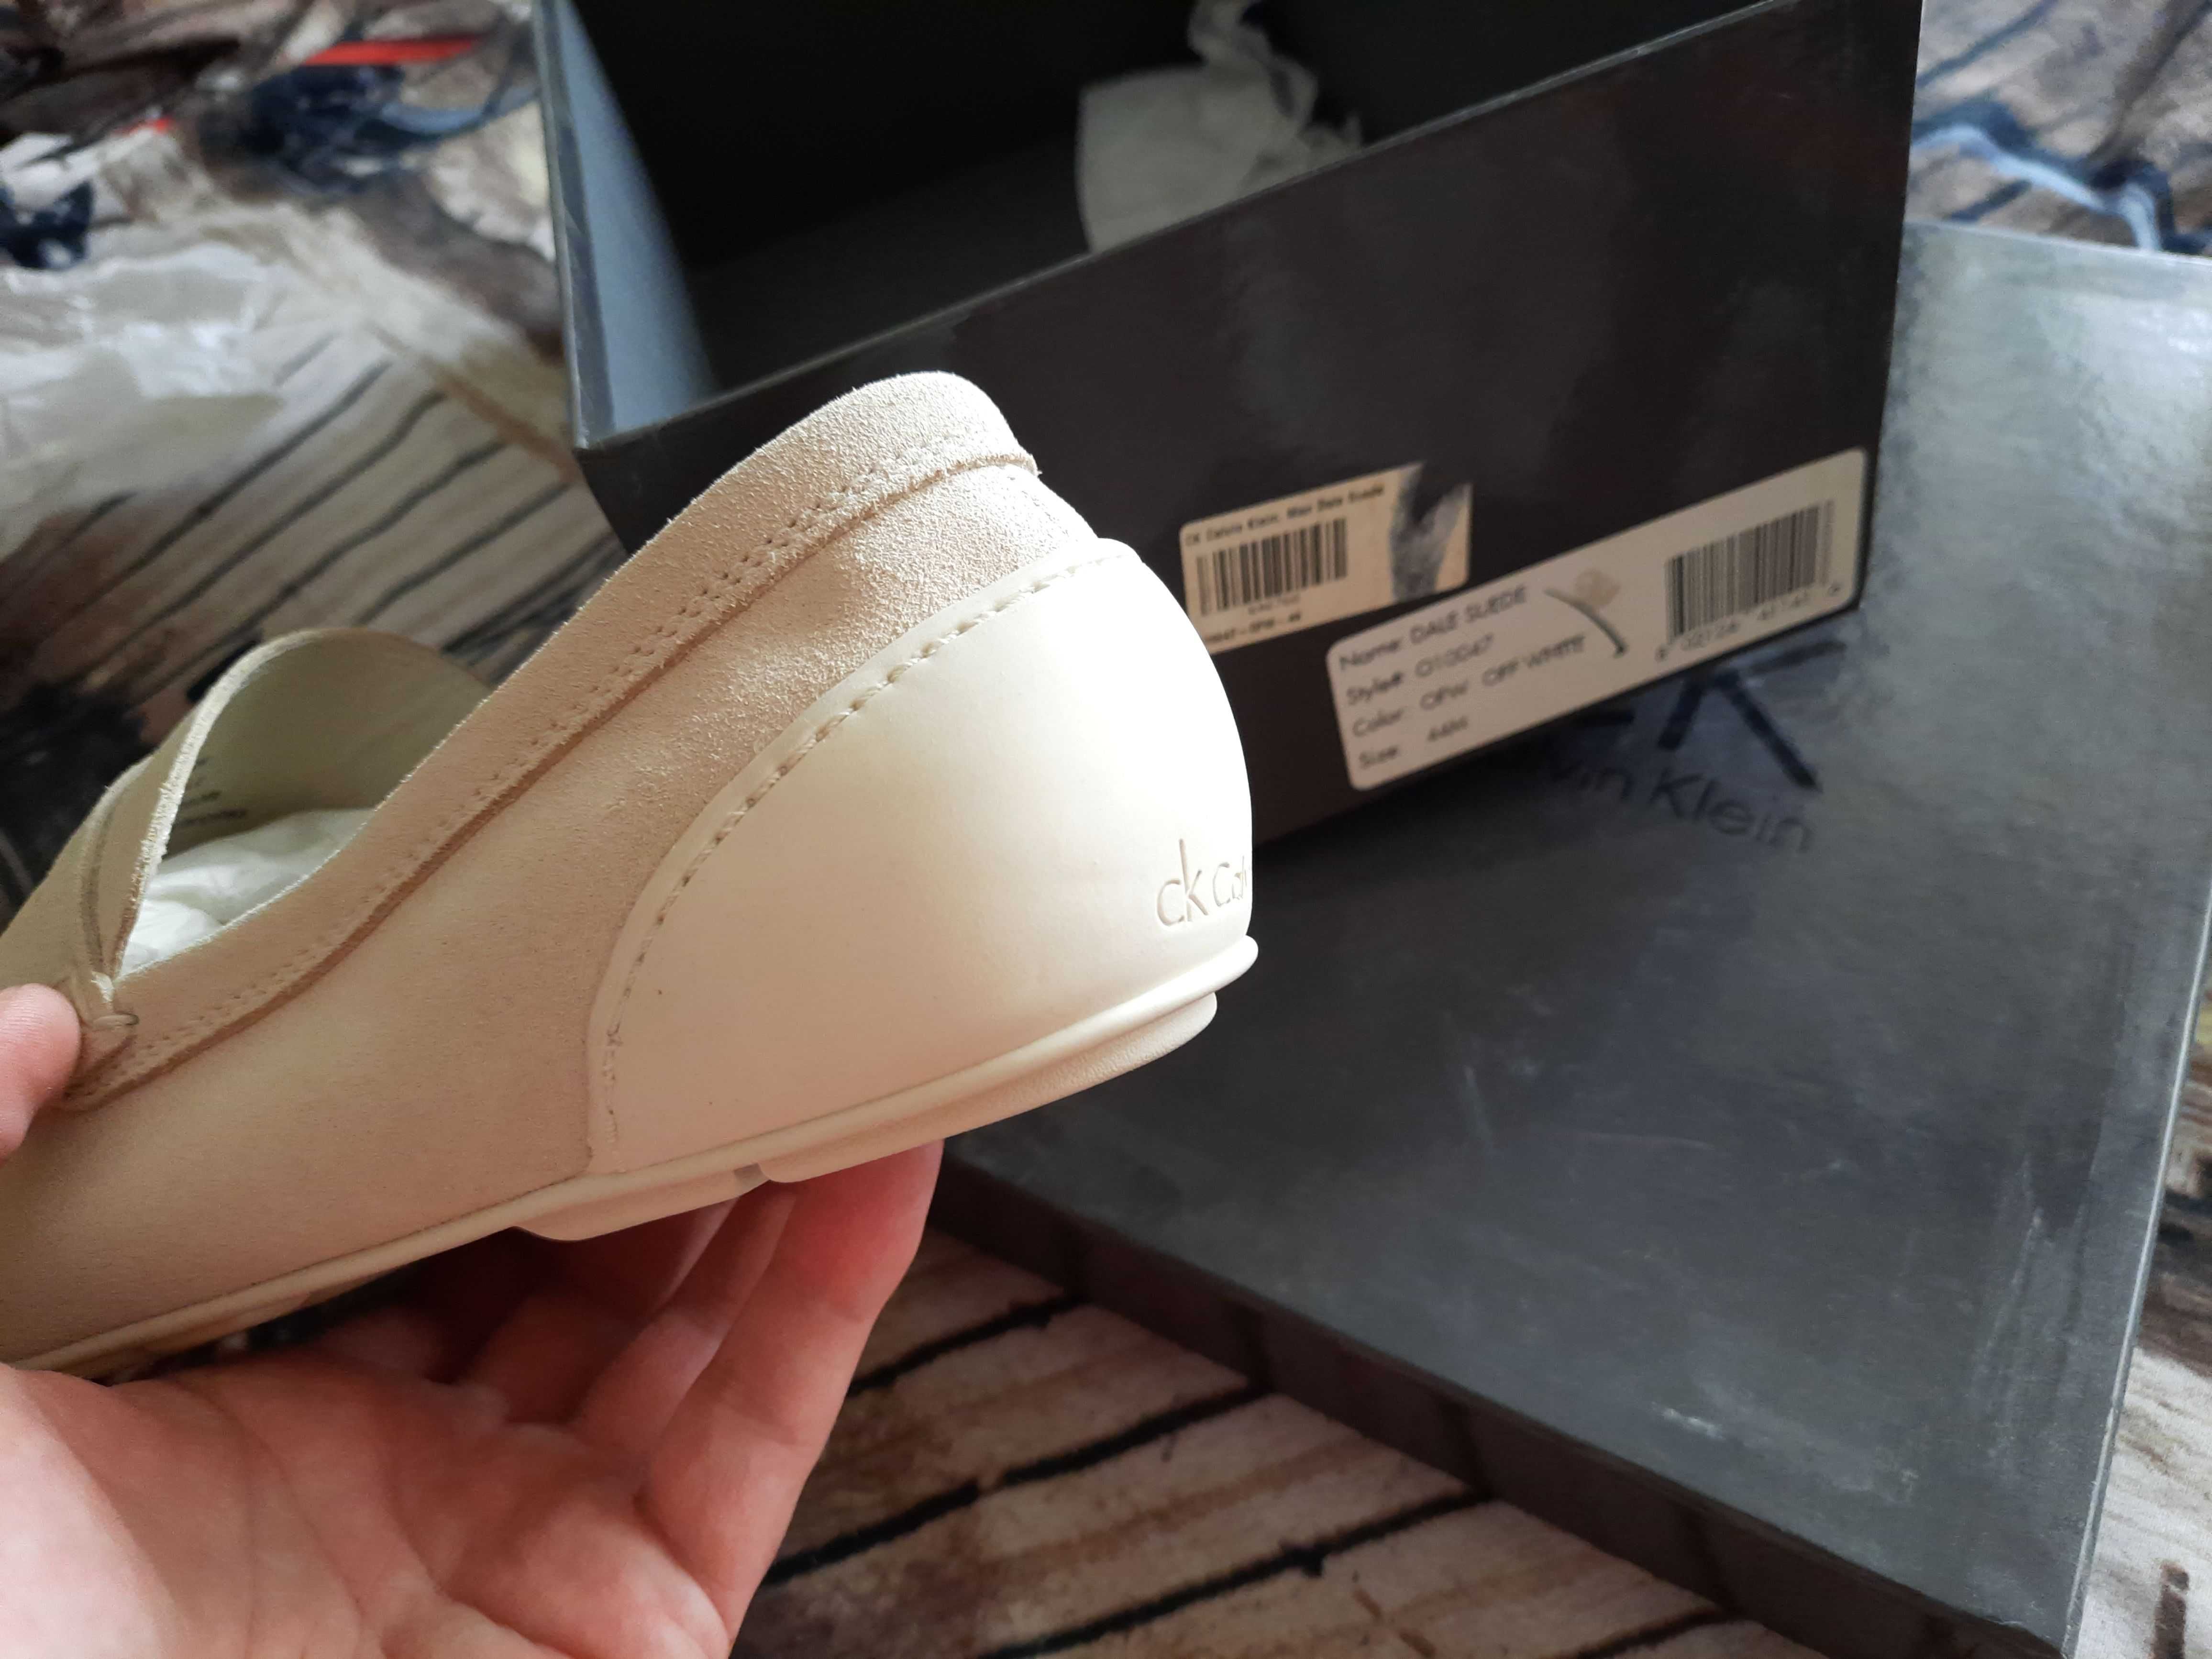 Pantofi Sport / Adidasi / Mocasini CK Calvin Klein Originali